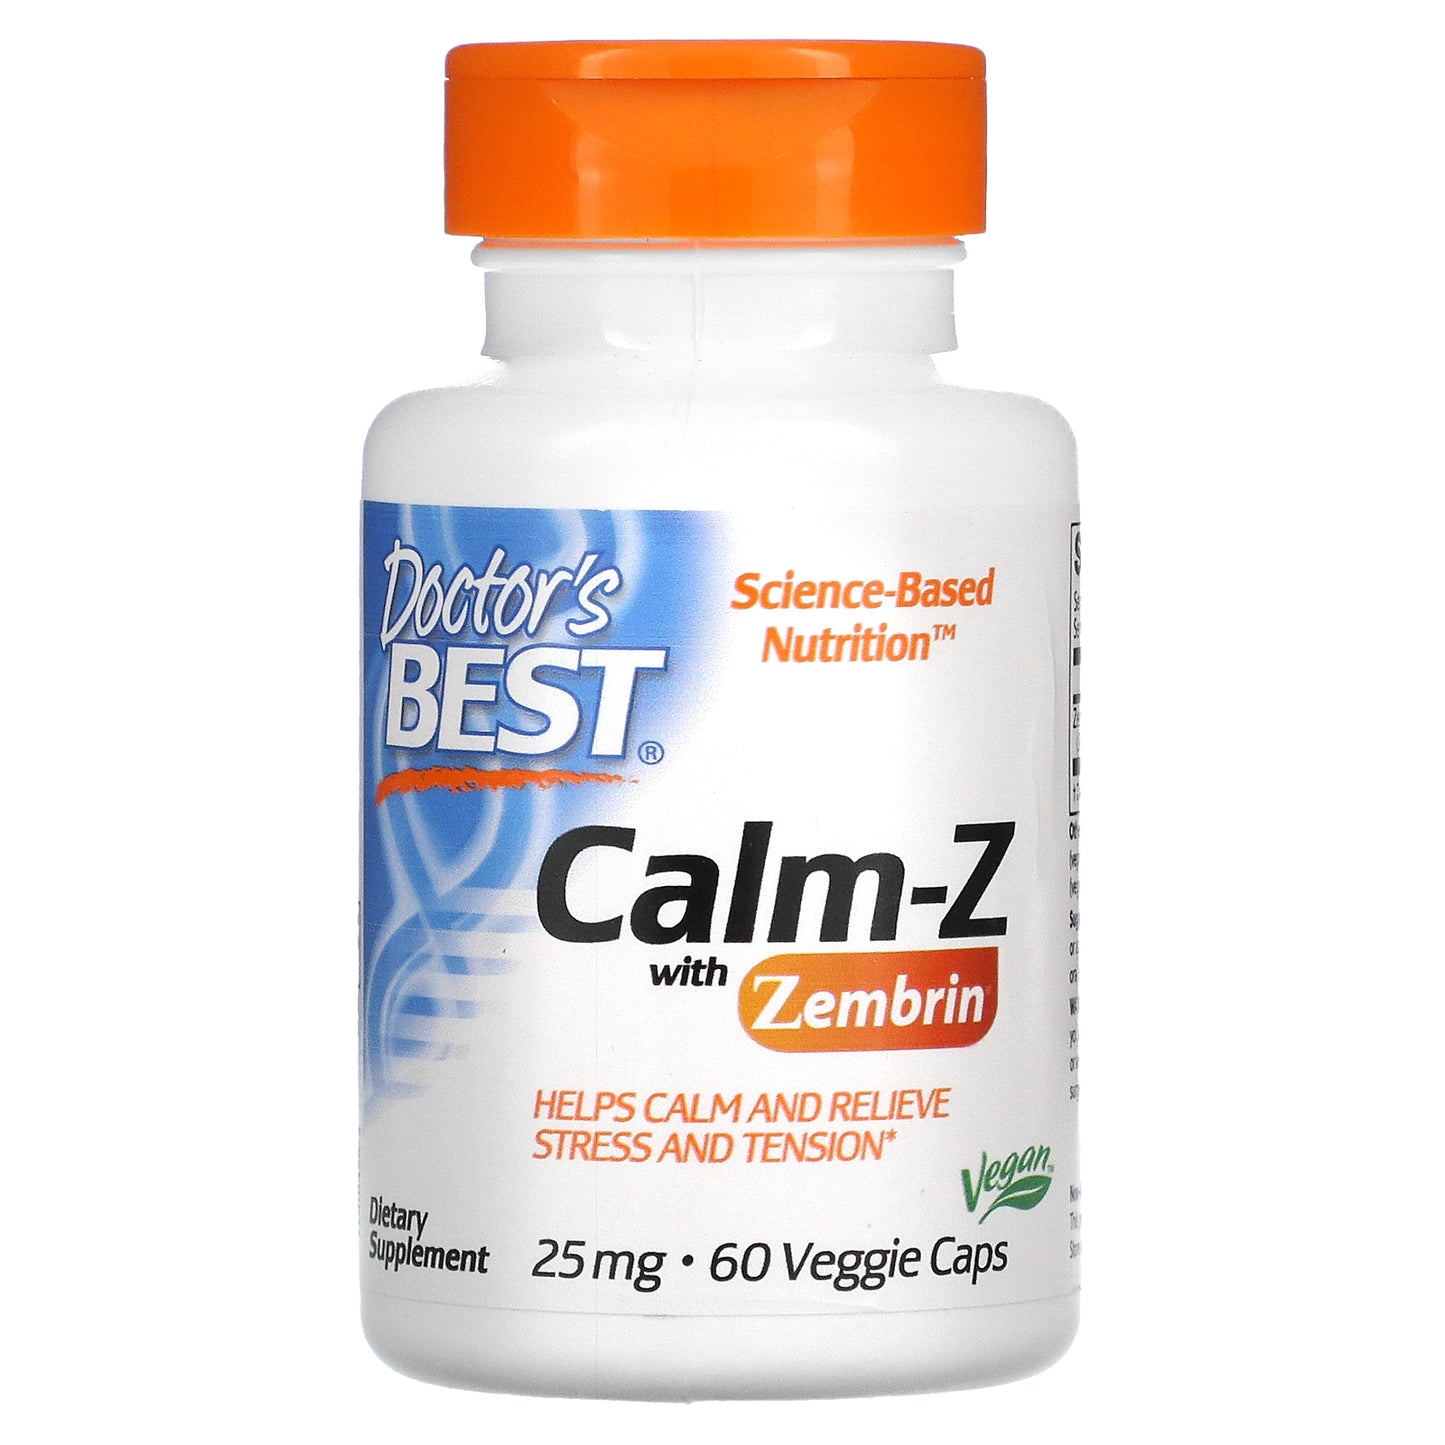 Doctor's Best Calm-Z with Zembrin, 25 mg, 60 Veggie Caps